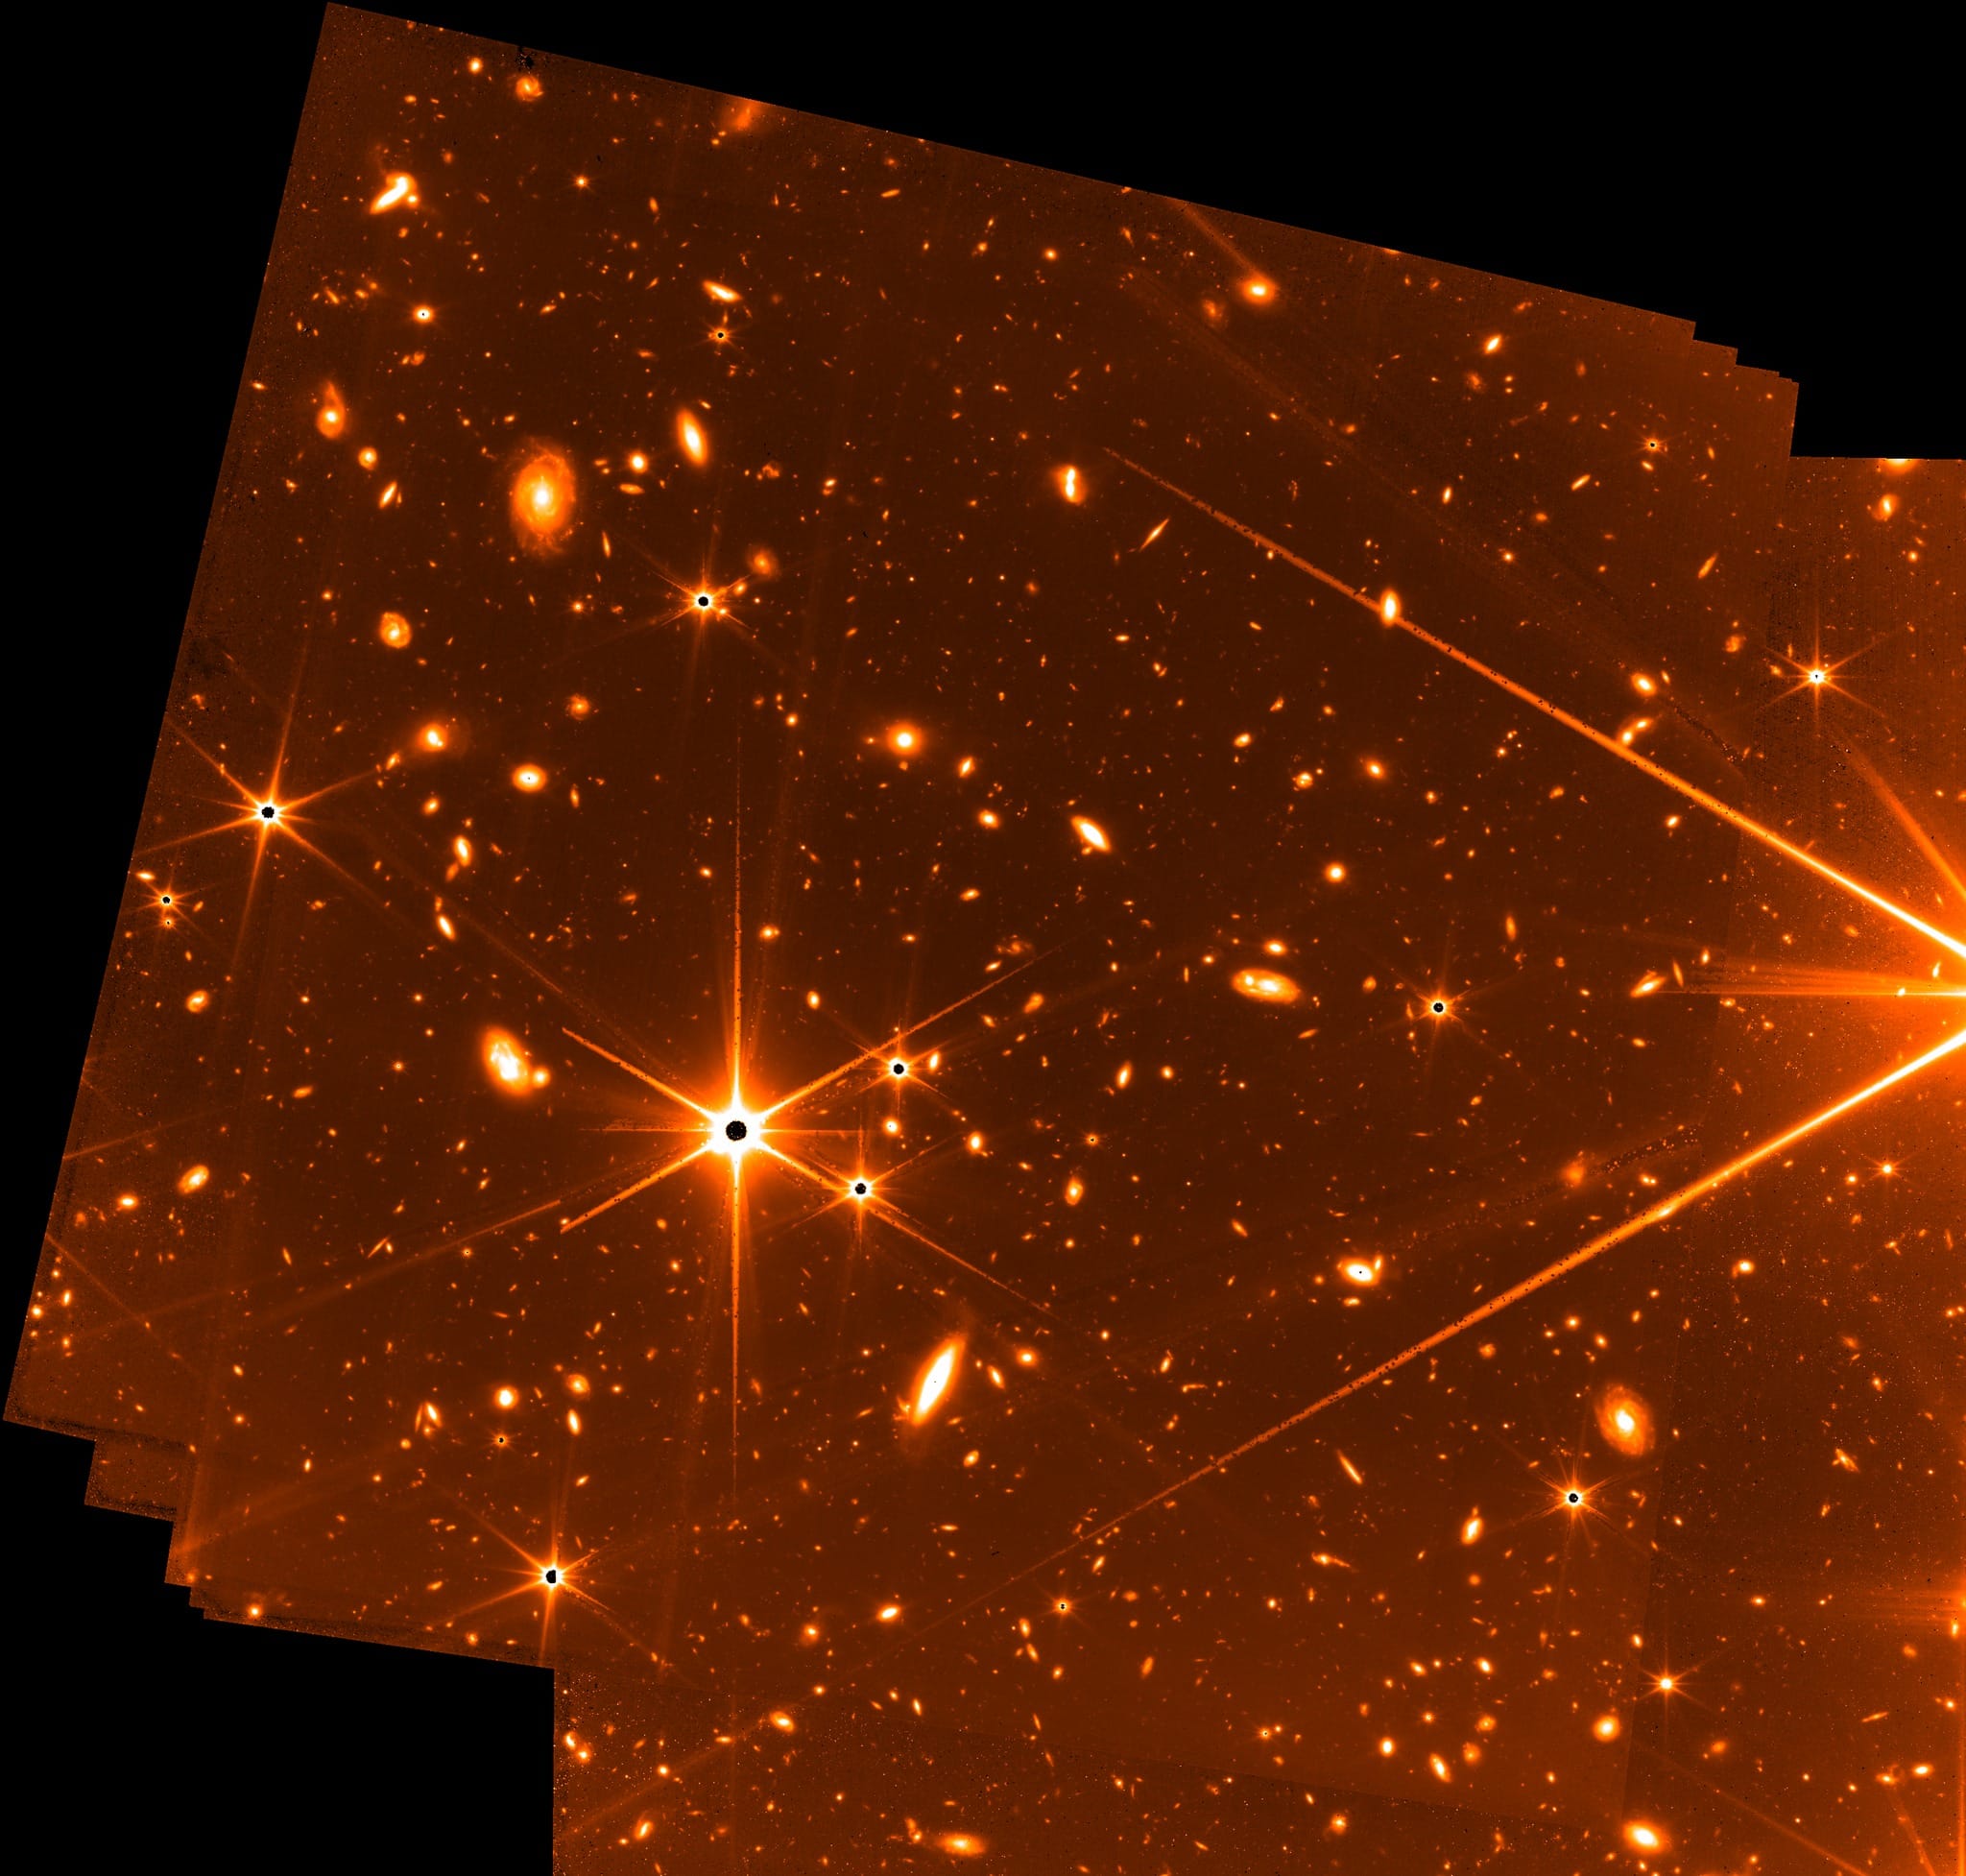 James Webb Space Telescope,ஜேம்ஸ் வெப் விண்வெளித் தொலைநோக்கி